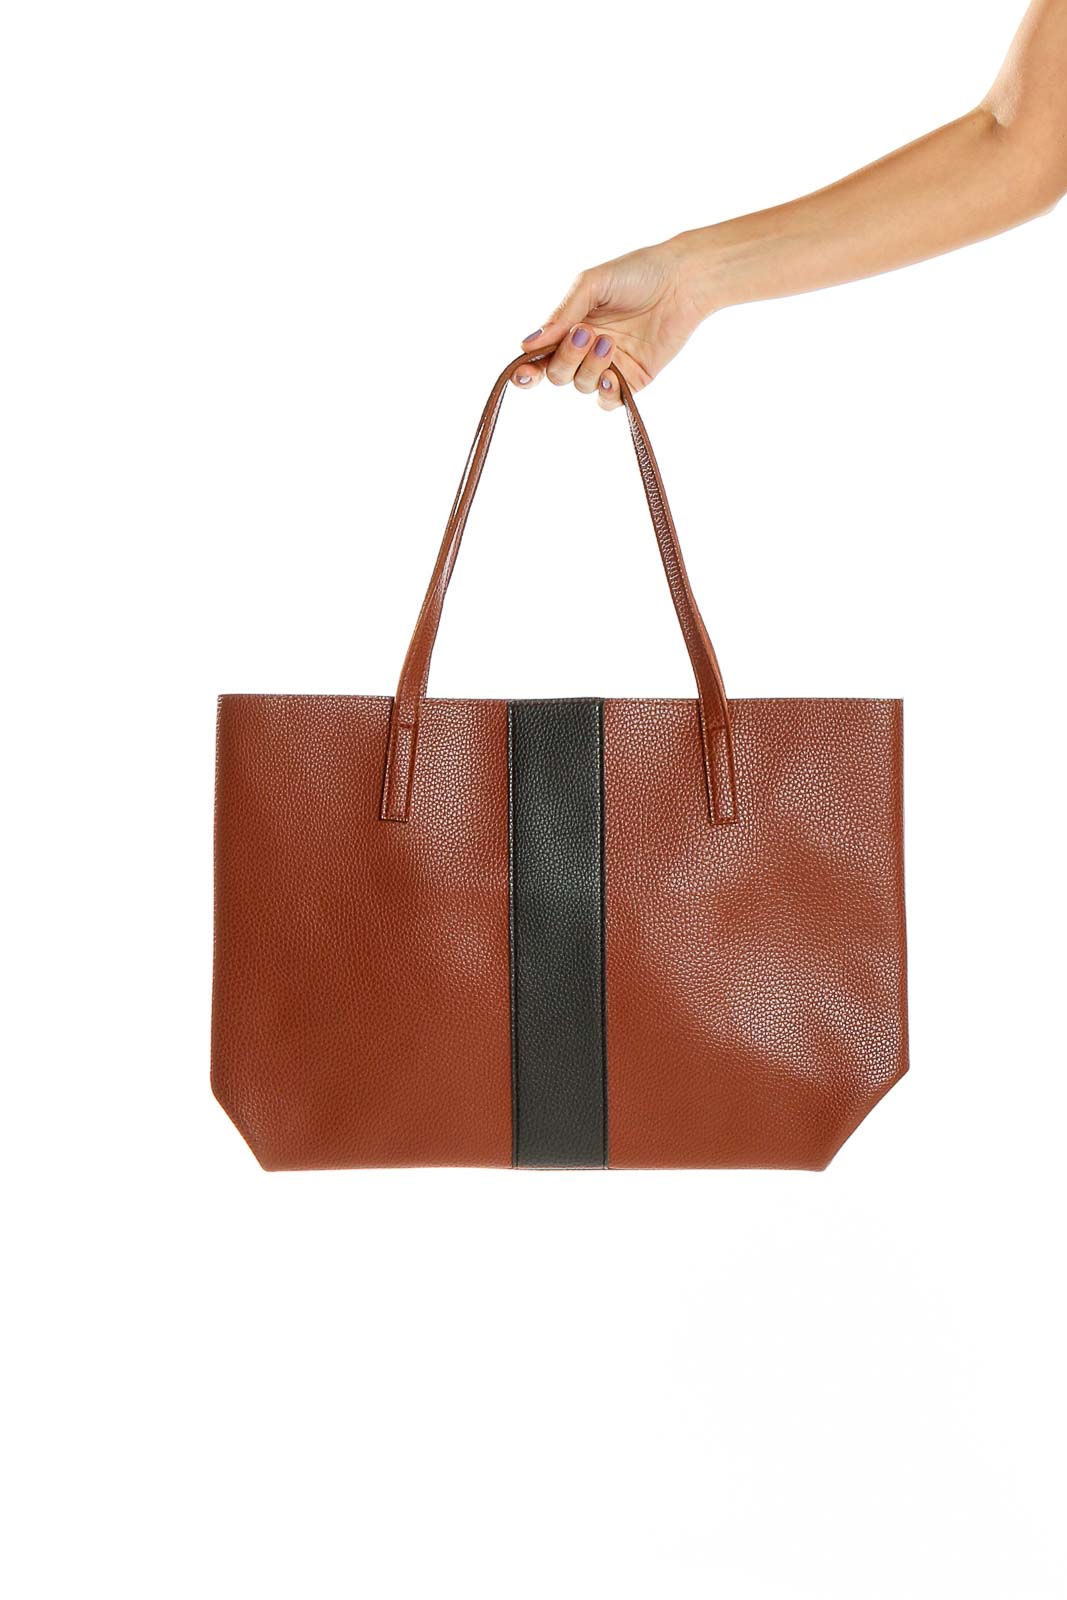 Brown Tote Bag Front